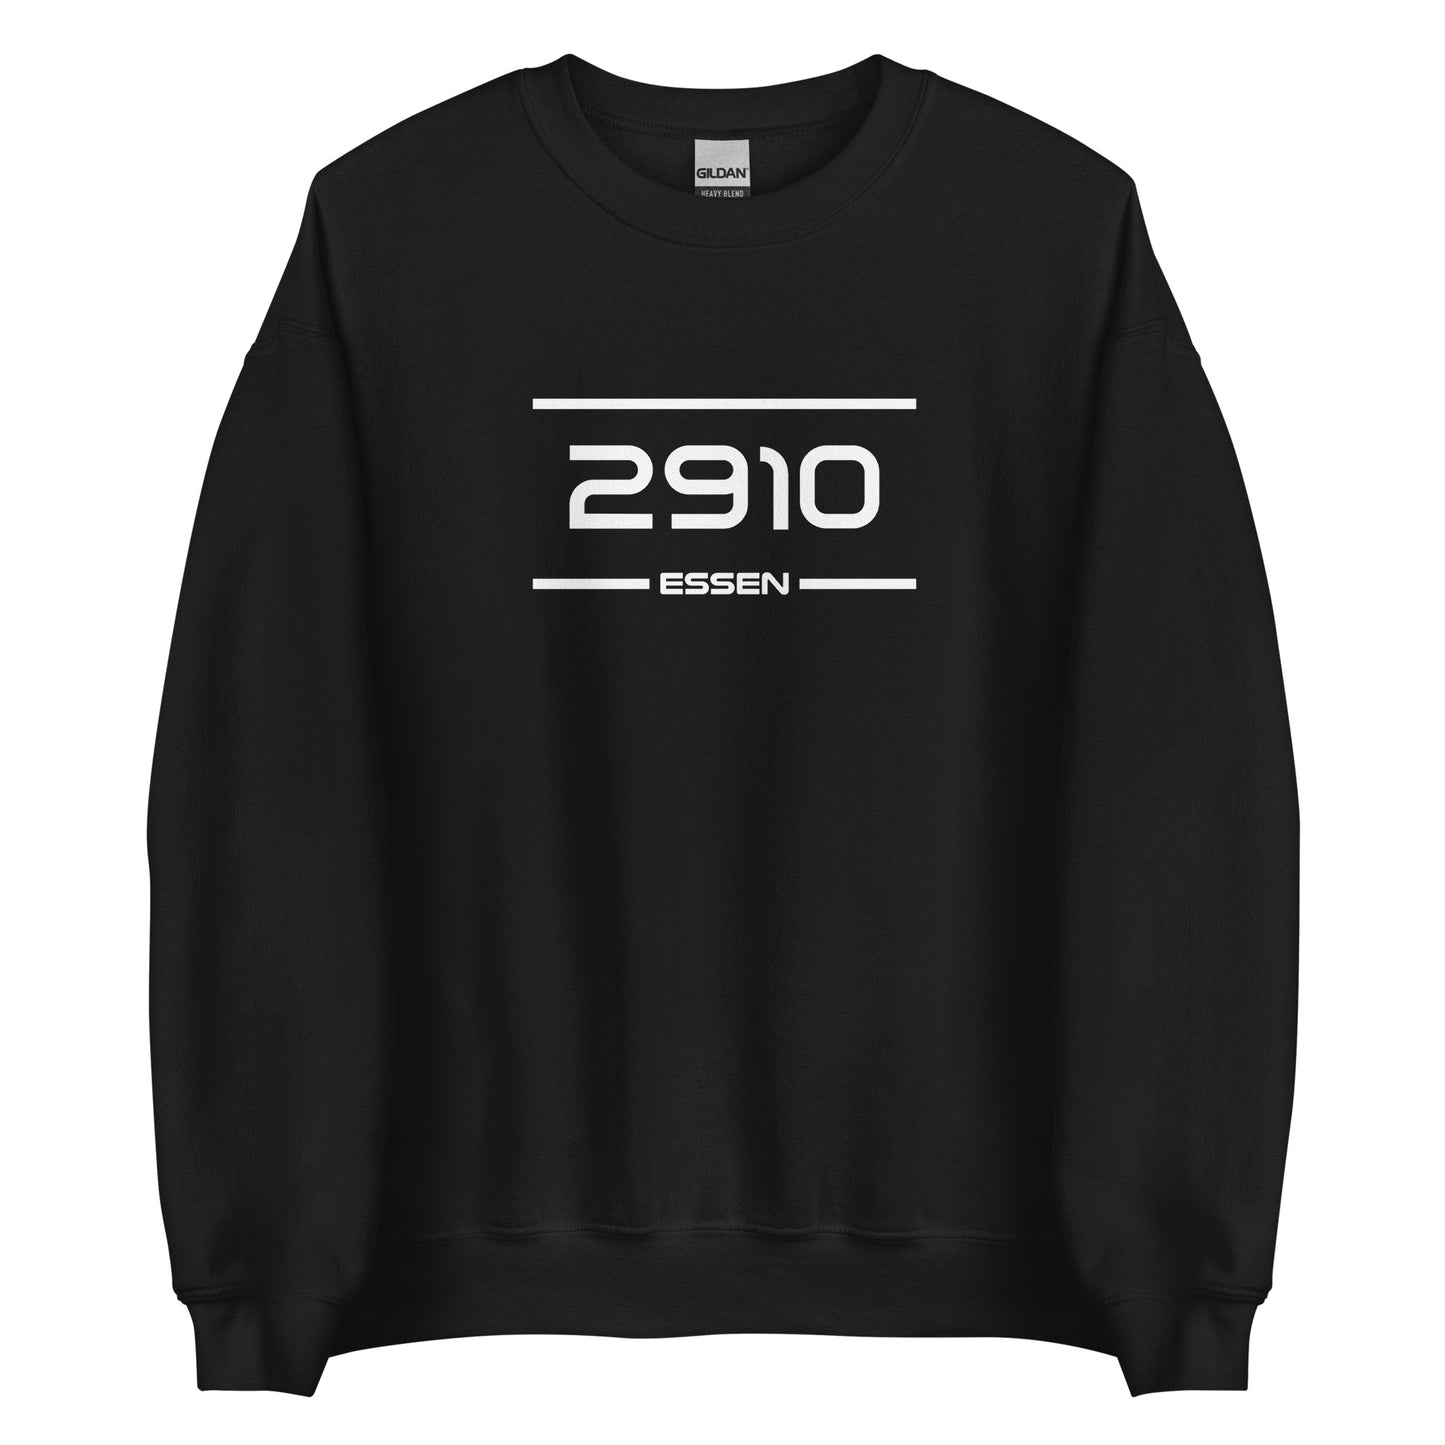 Sweater - 2910 - Essen (M/V)